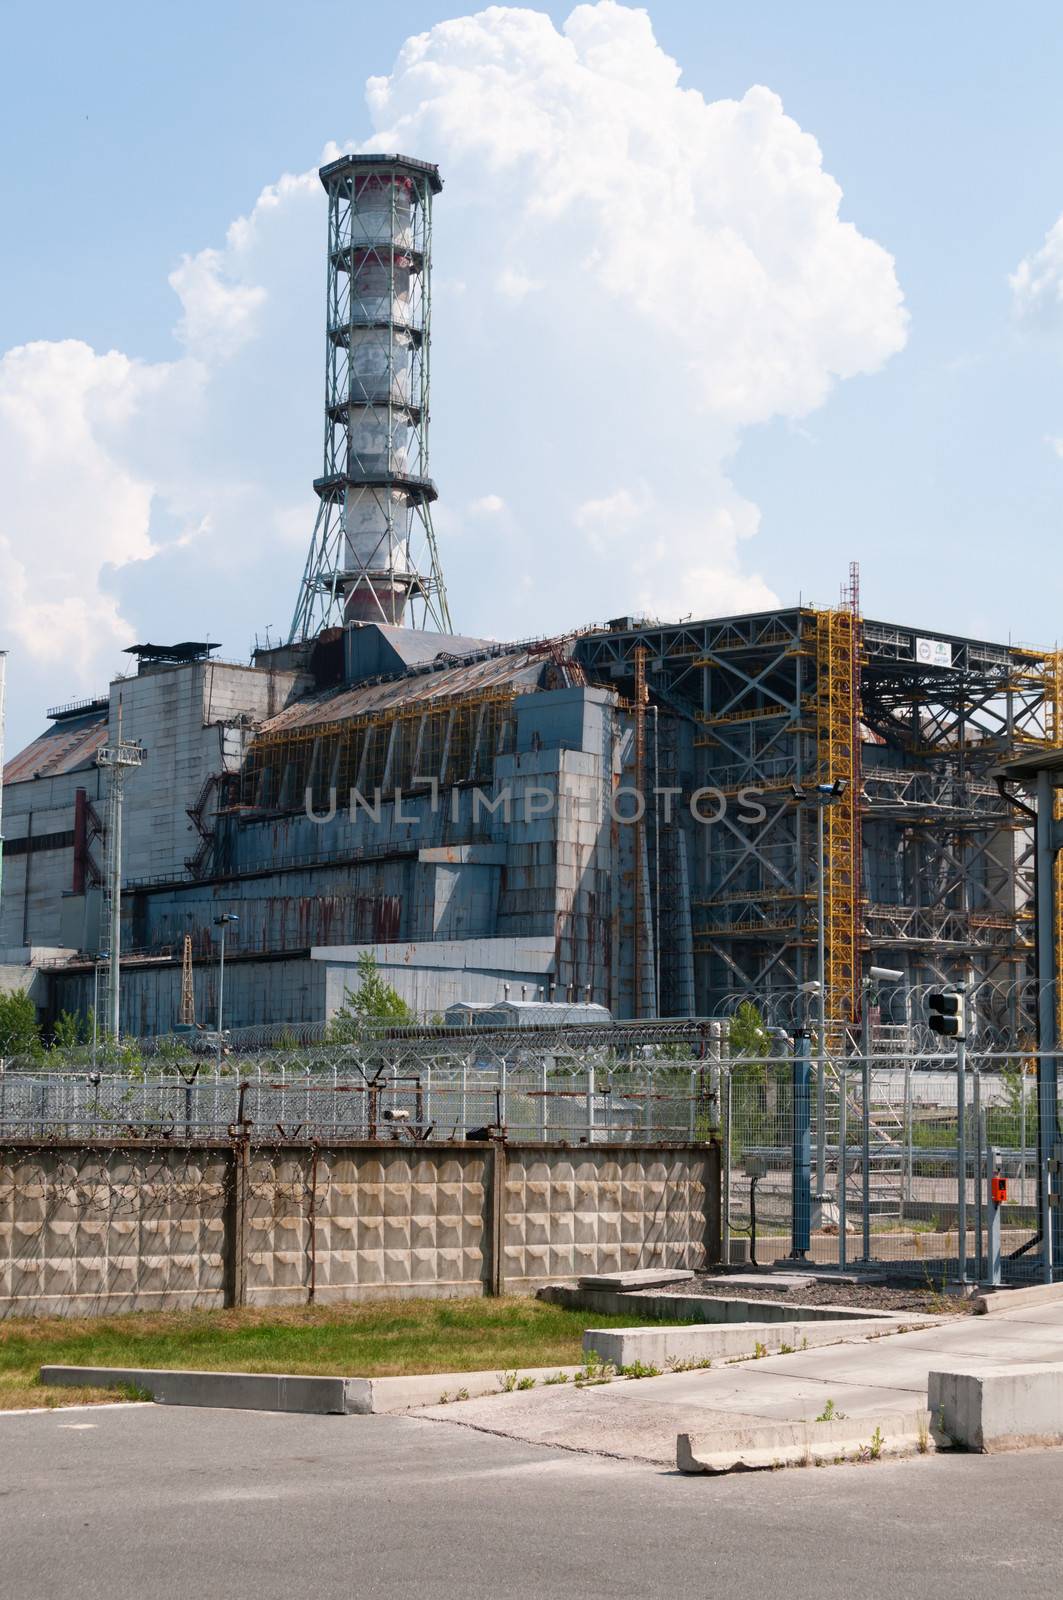 Chernobyl nuclear reactor power station under sarcophagus